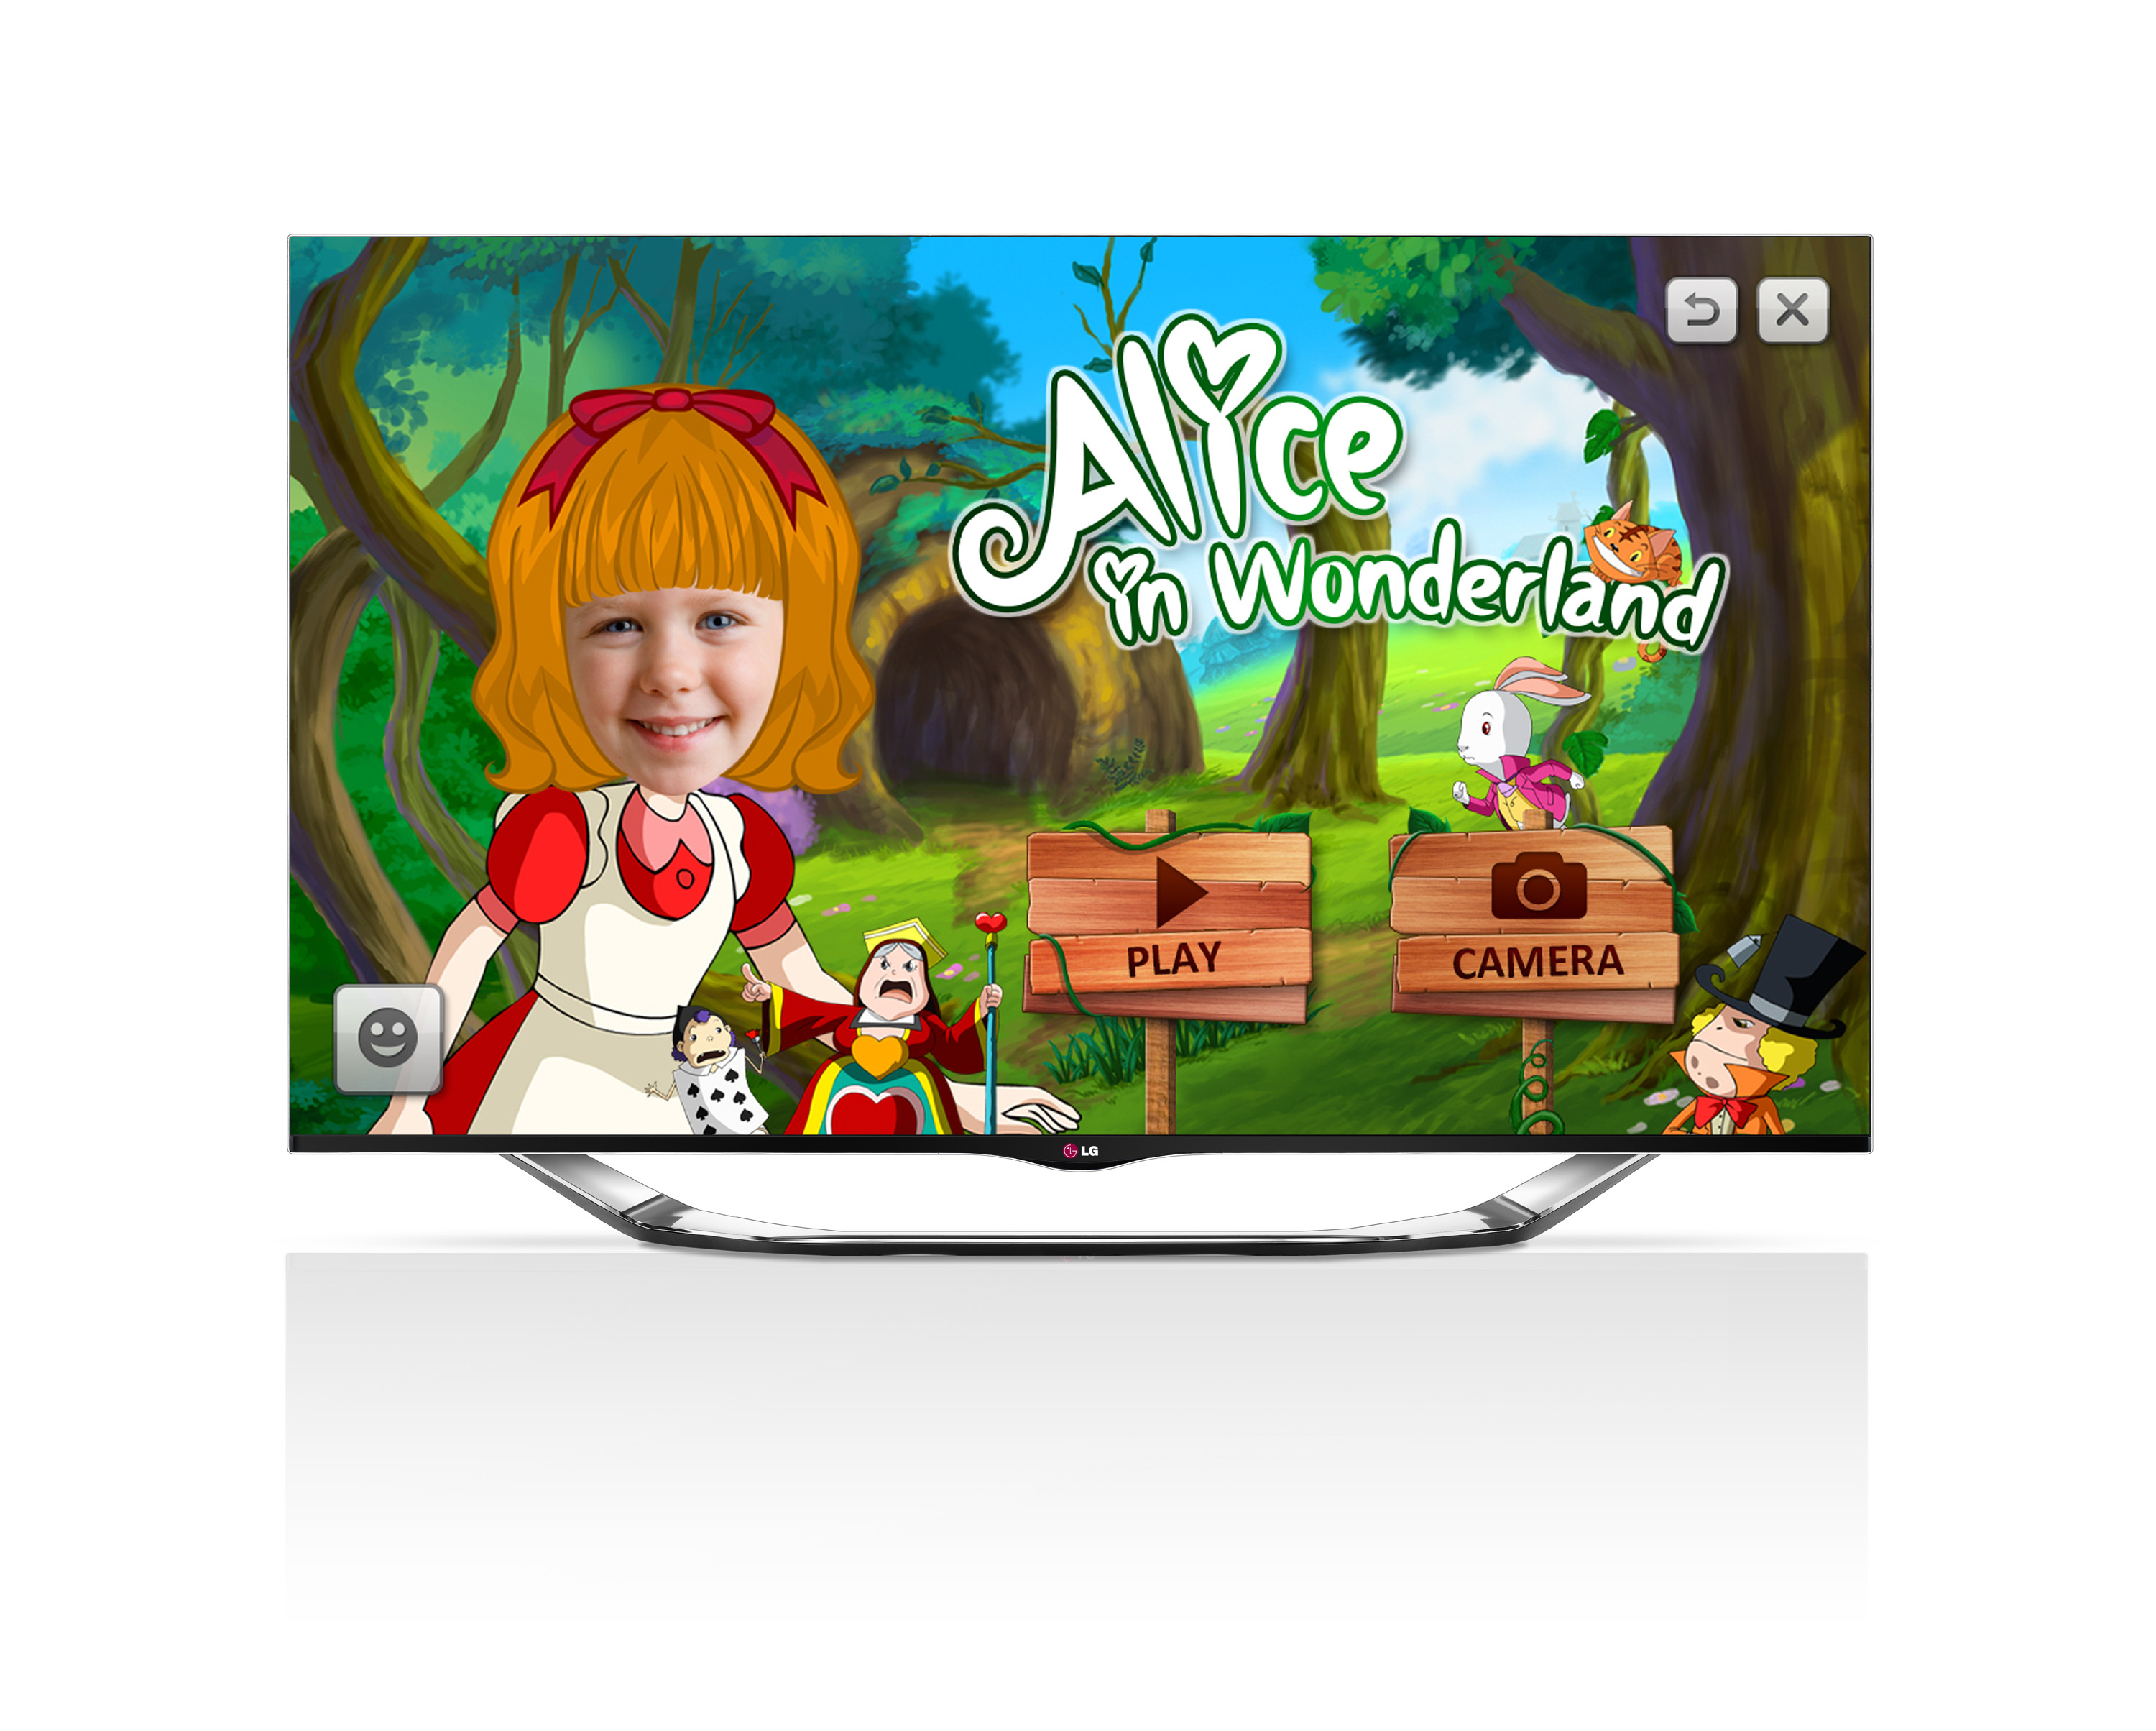 Alice in Wonderland is presented on an LG TV’s screen via LG’s children-friendly Smart TV app, Avatarbook